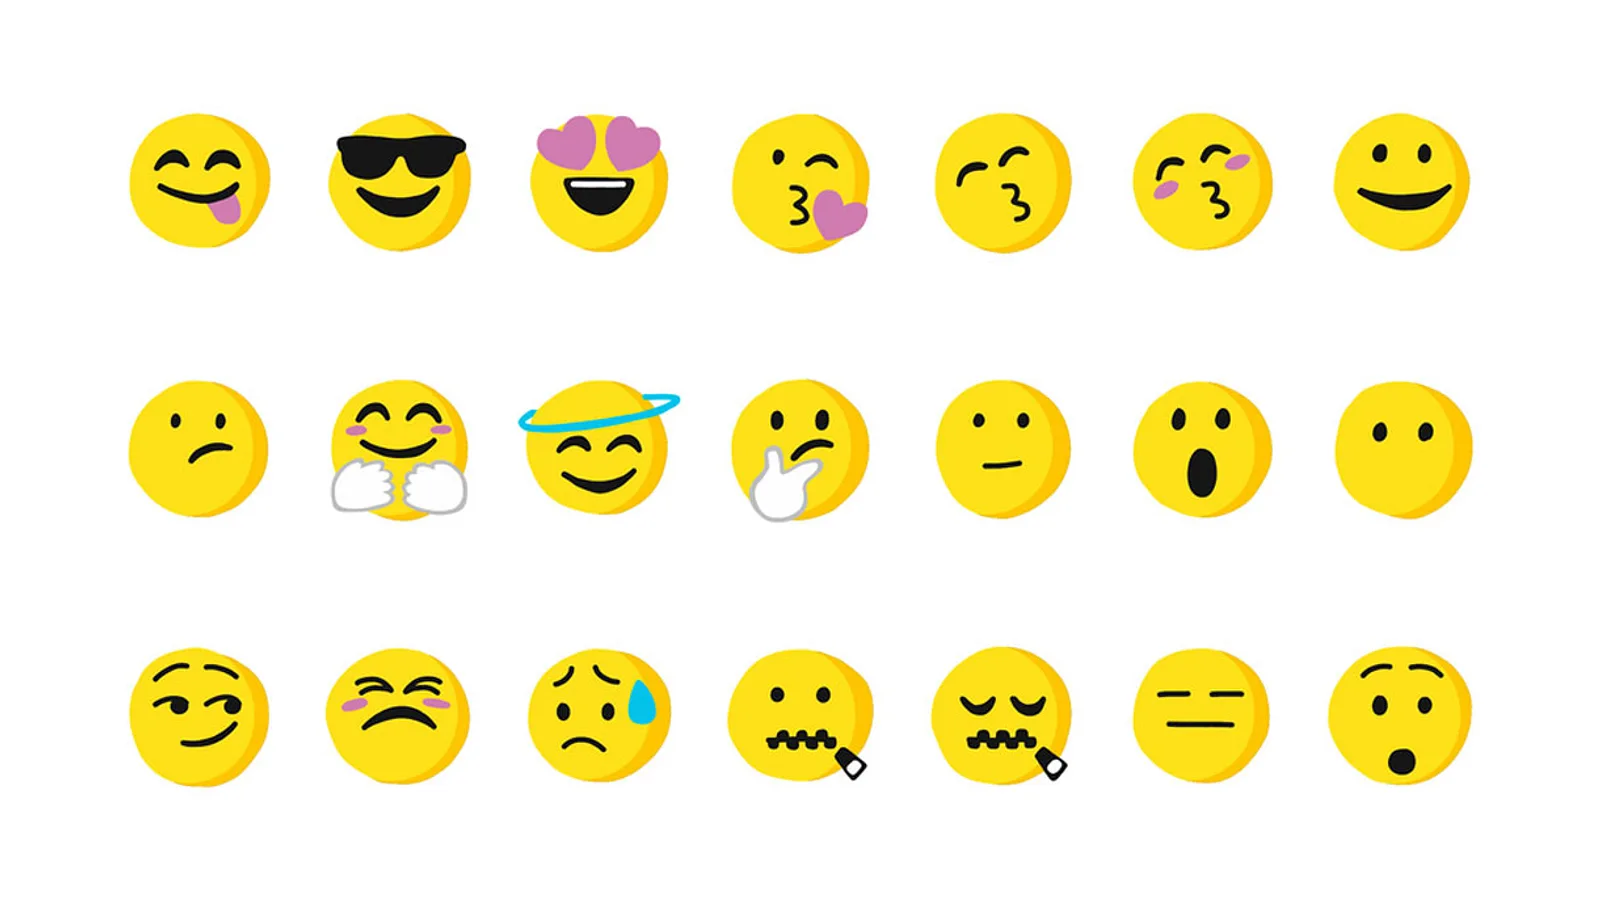 emojis smileys,id=1418d3fc,b=maennersache,w=1600,rm=sk